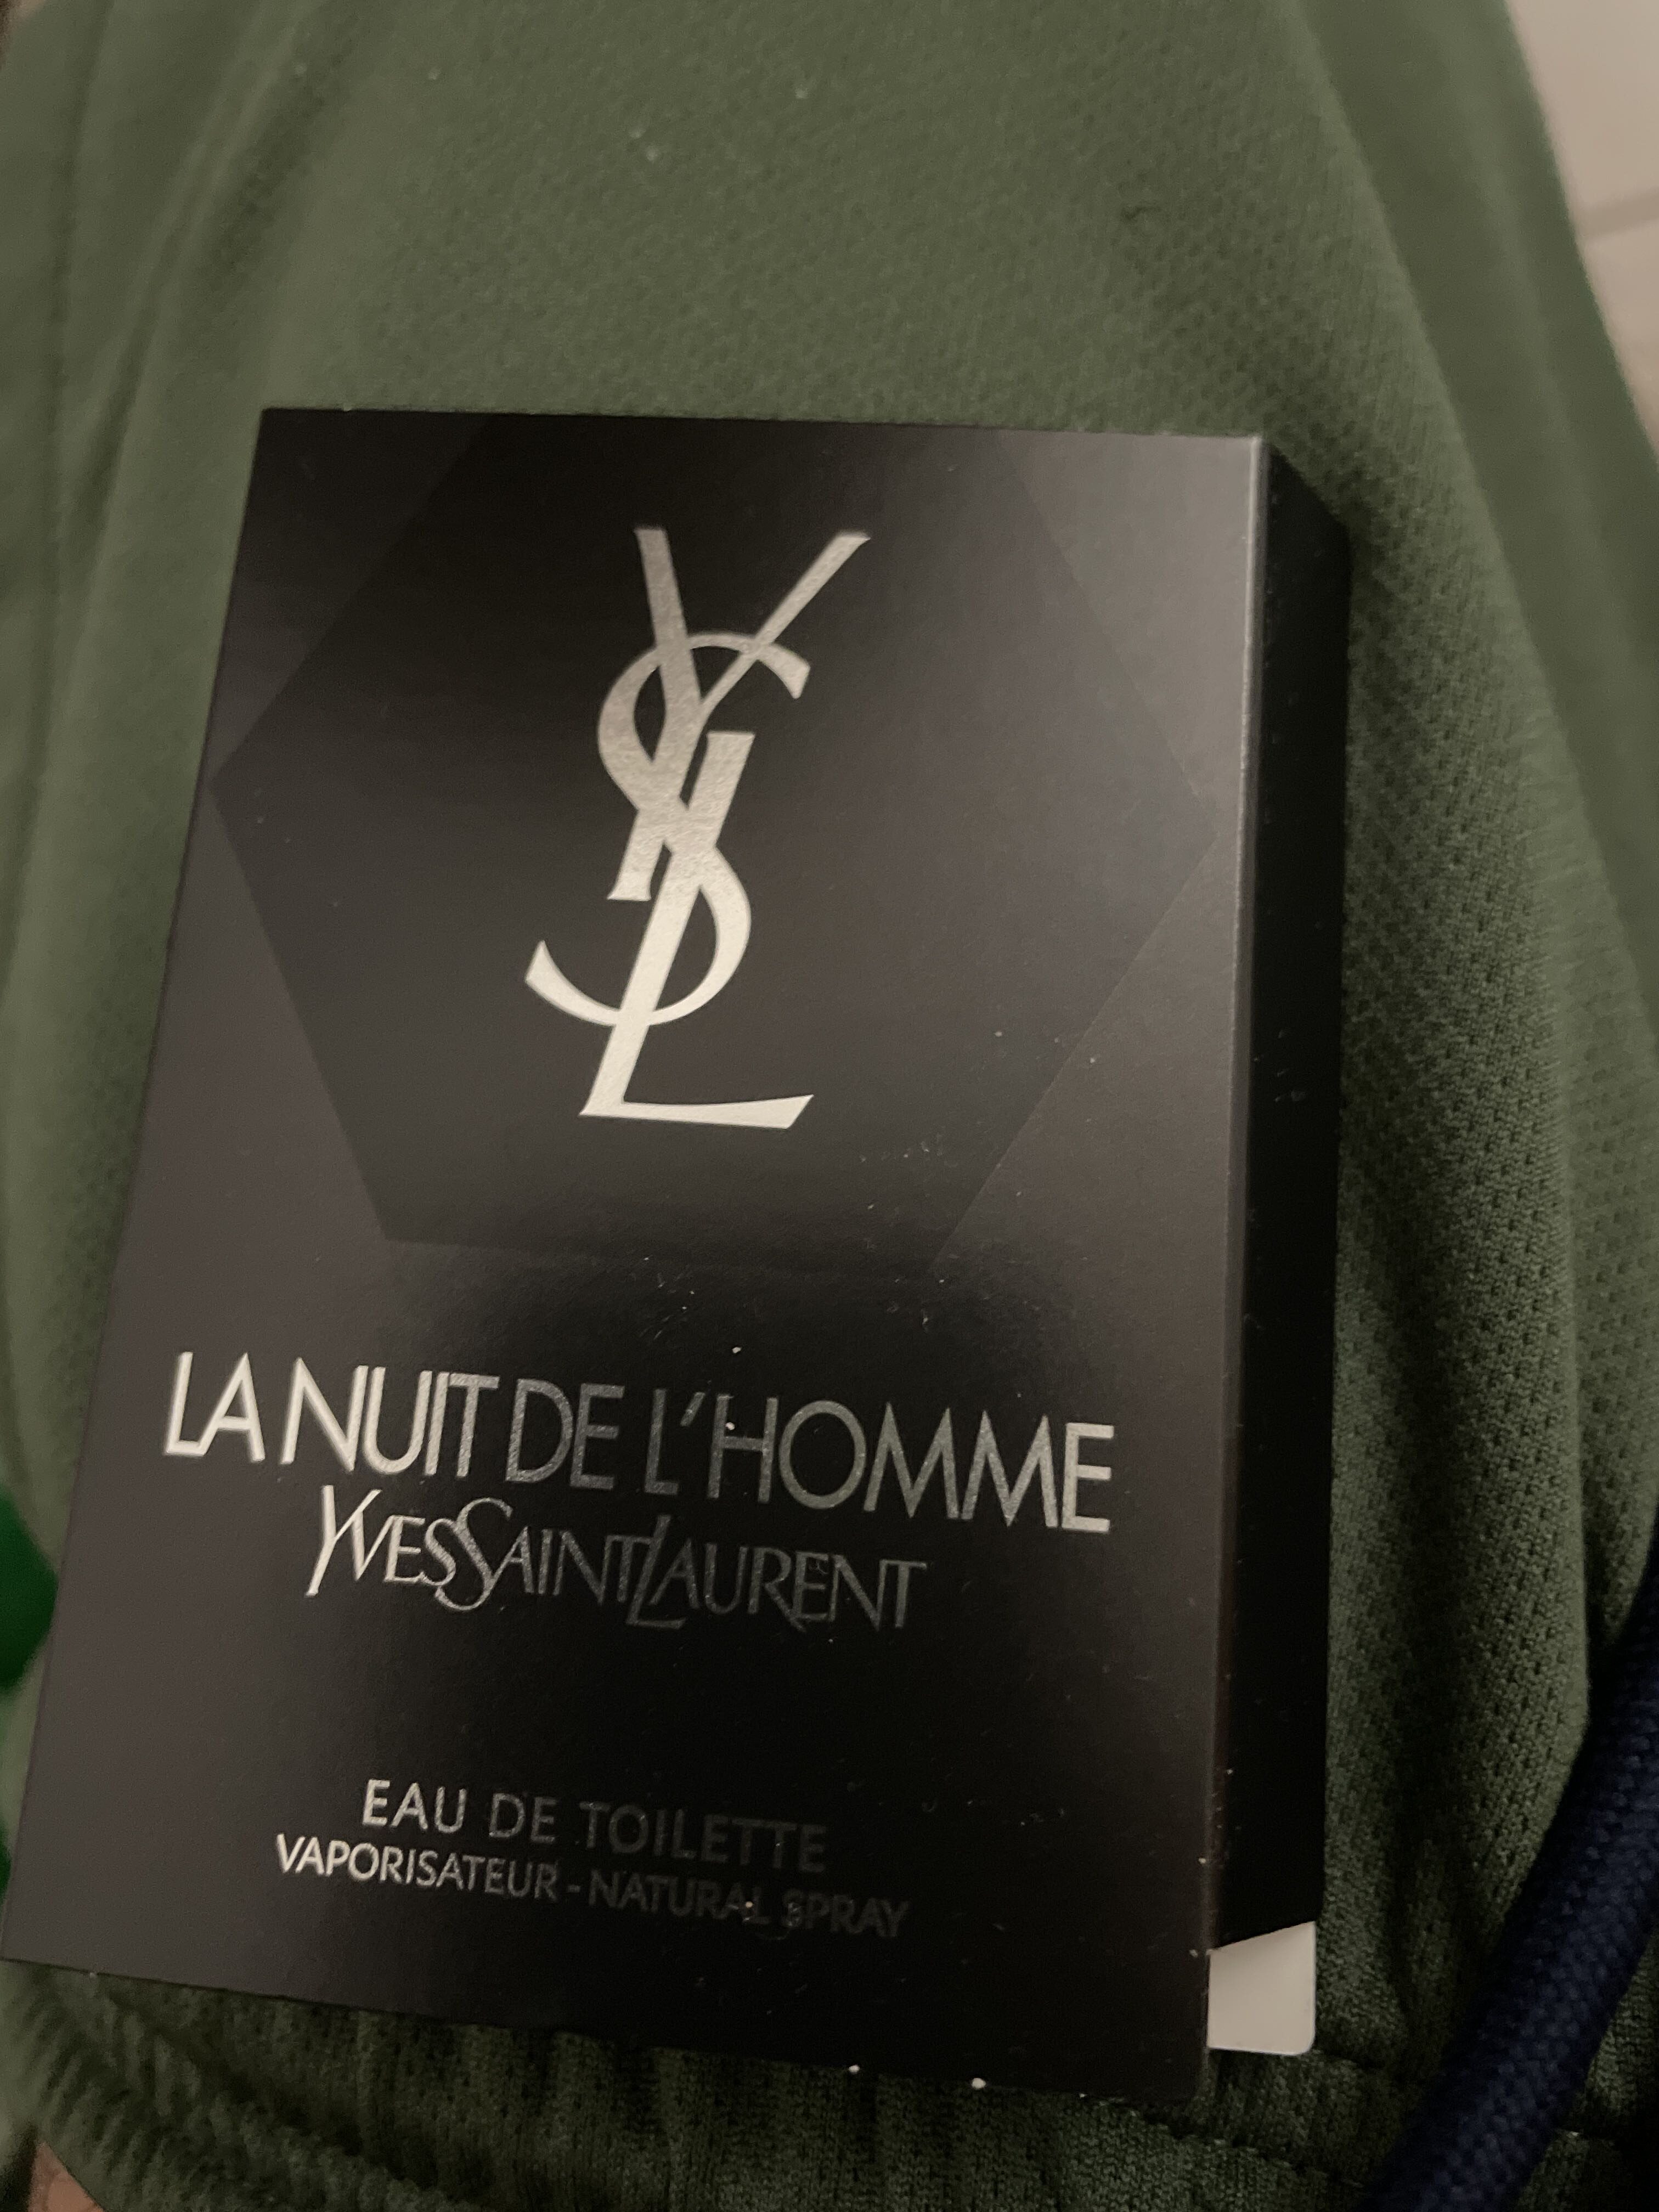 Yves saint Laurent - Product - fr